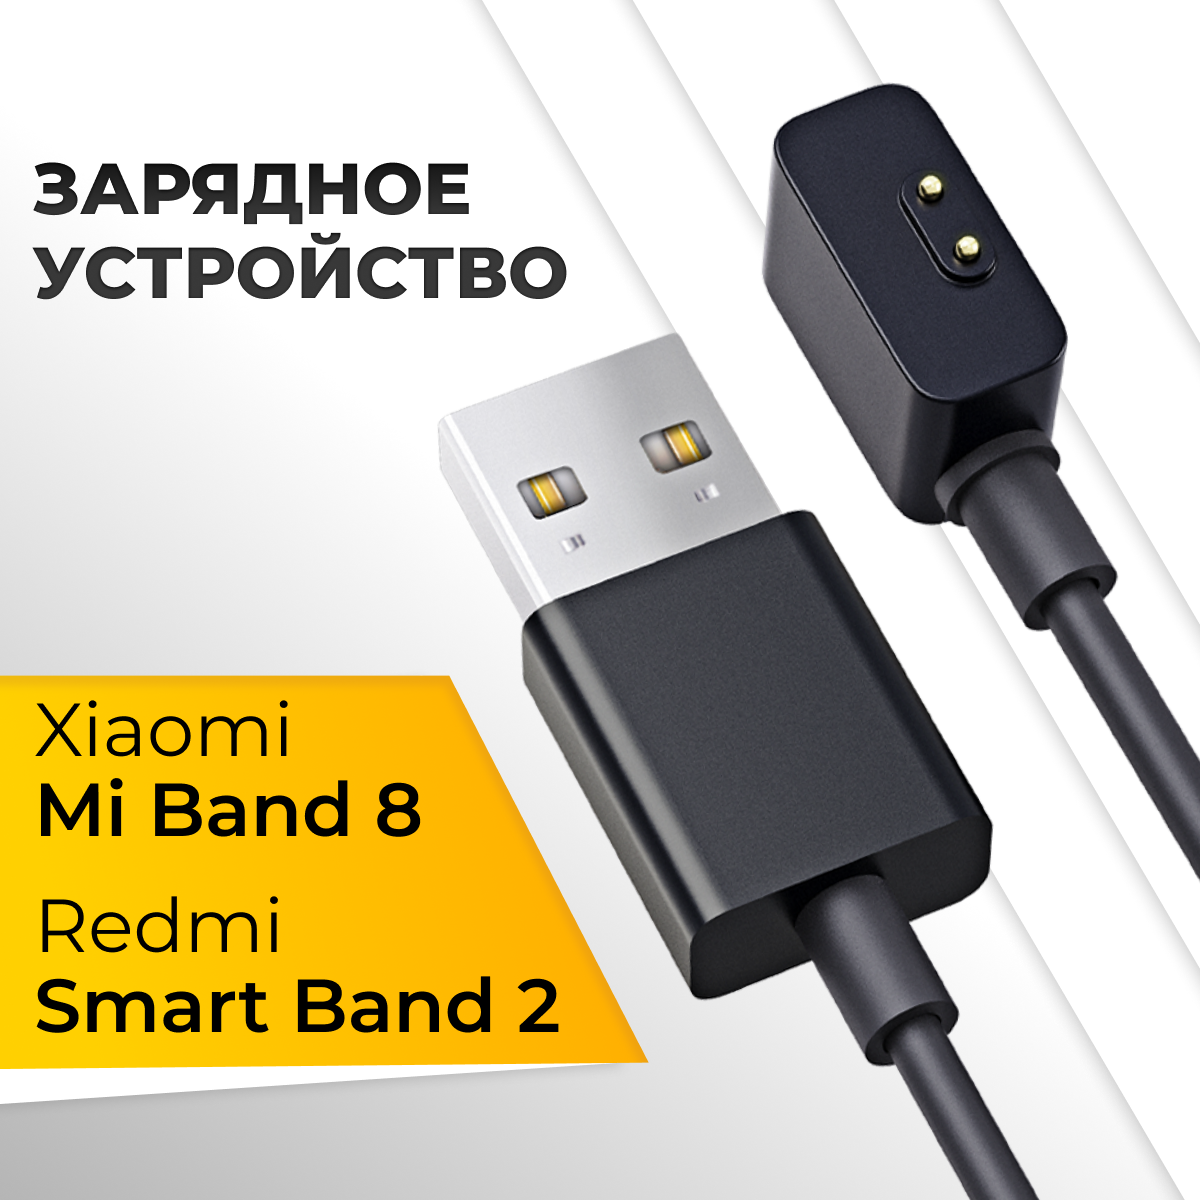 Зарядное устройство для фитнес браслета Xiaomi Mi Band 8 Redmi Smart Band 2 / Зарядка для смарт часов Сяоми Ми банд 8 Редми Смарт банд 2 / Белый